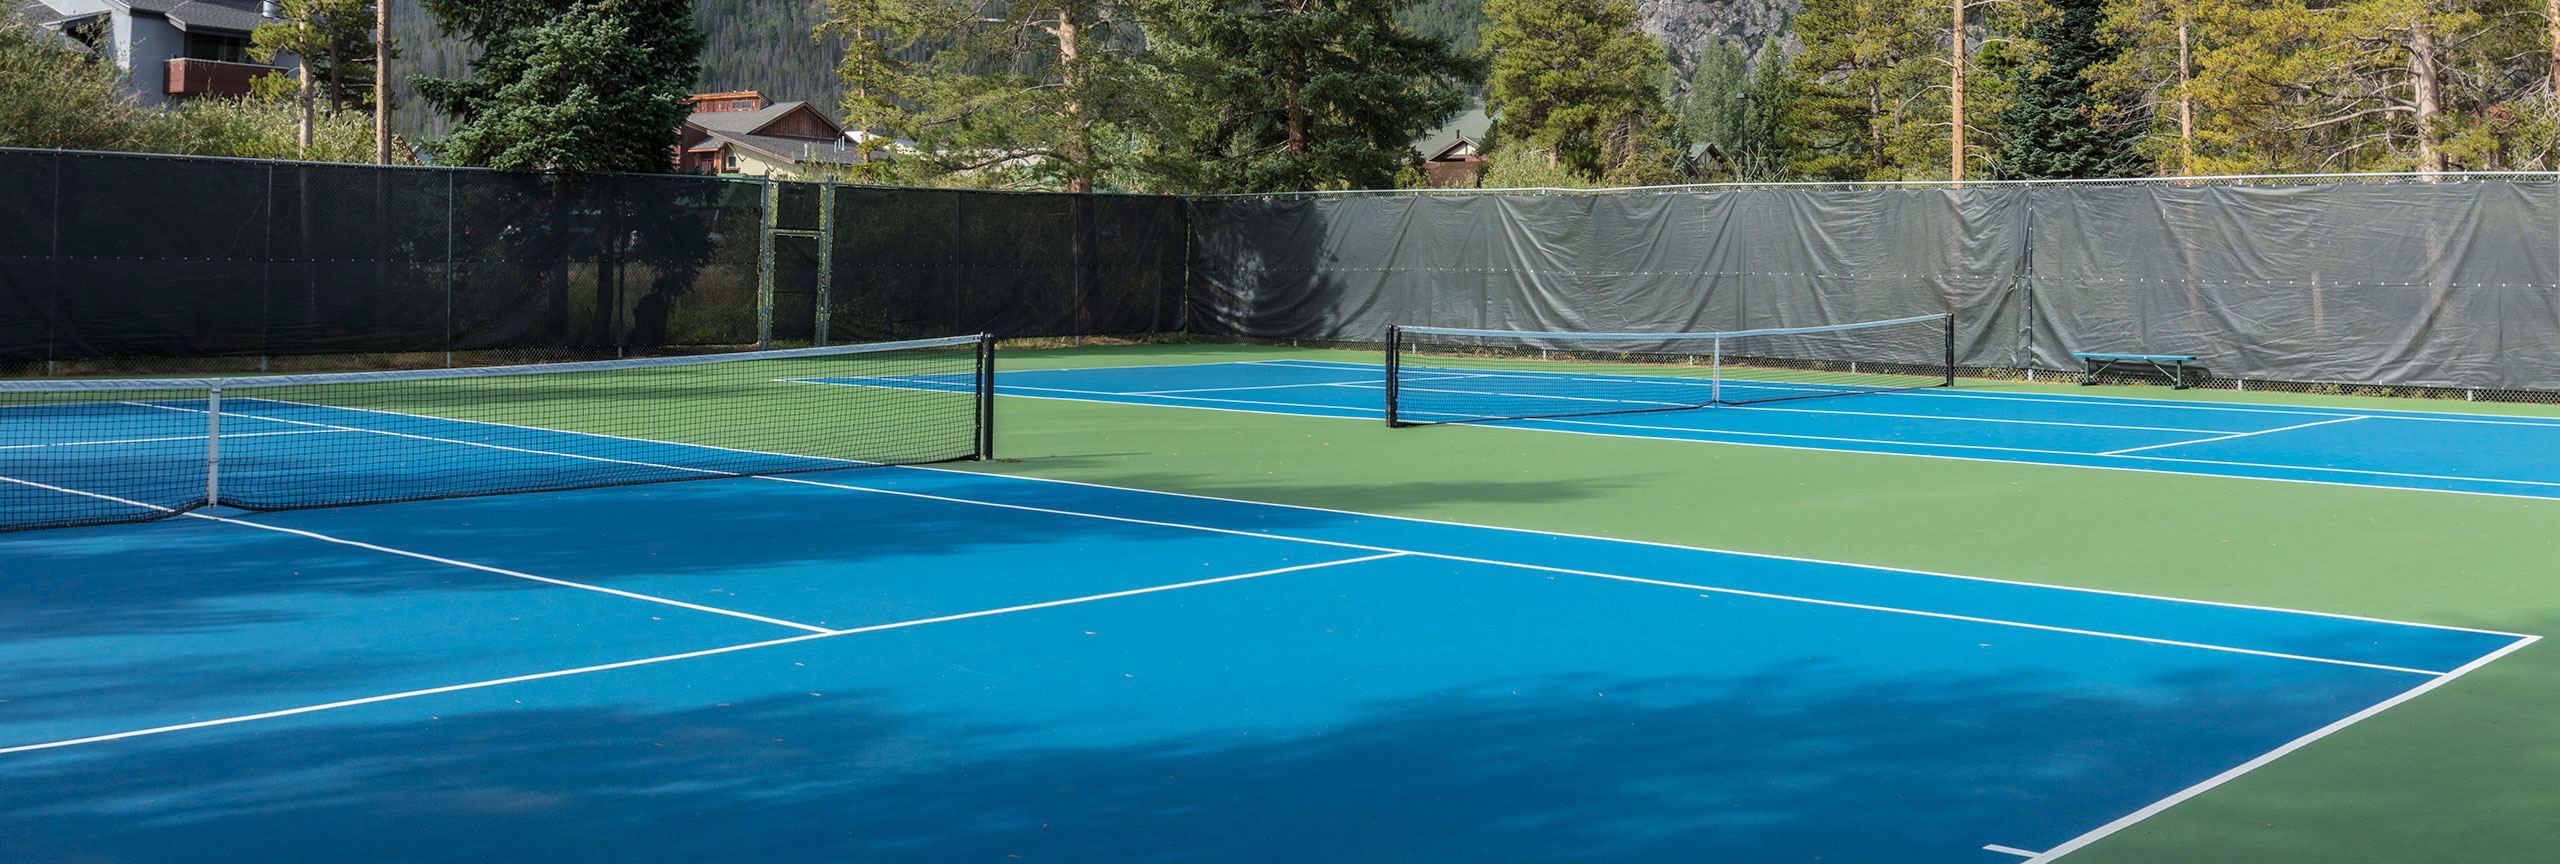 Tennis court at Pioneer Park.